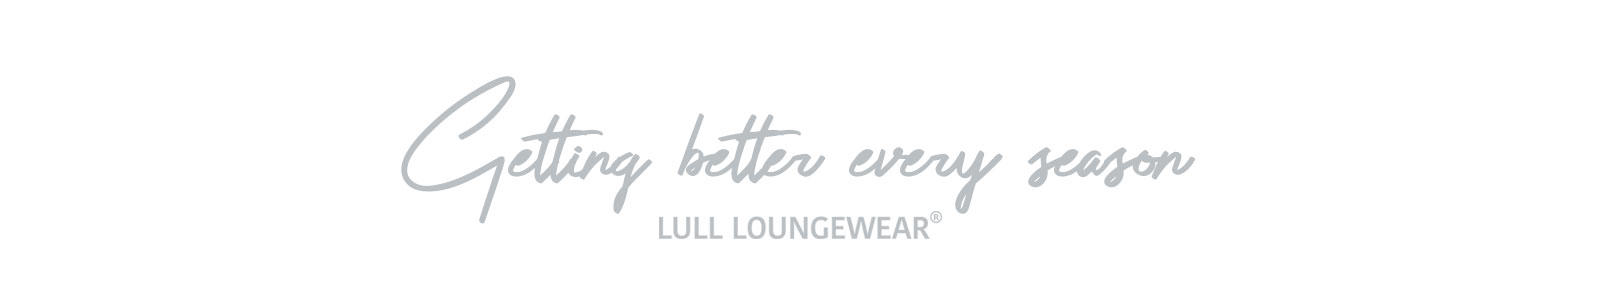 Lull - Getting better every season logo